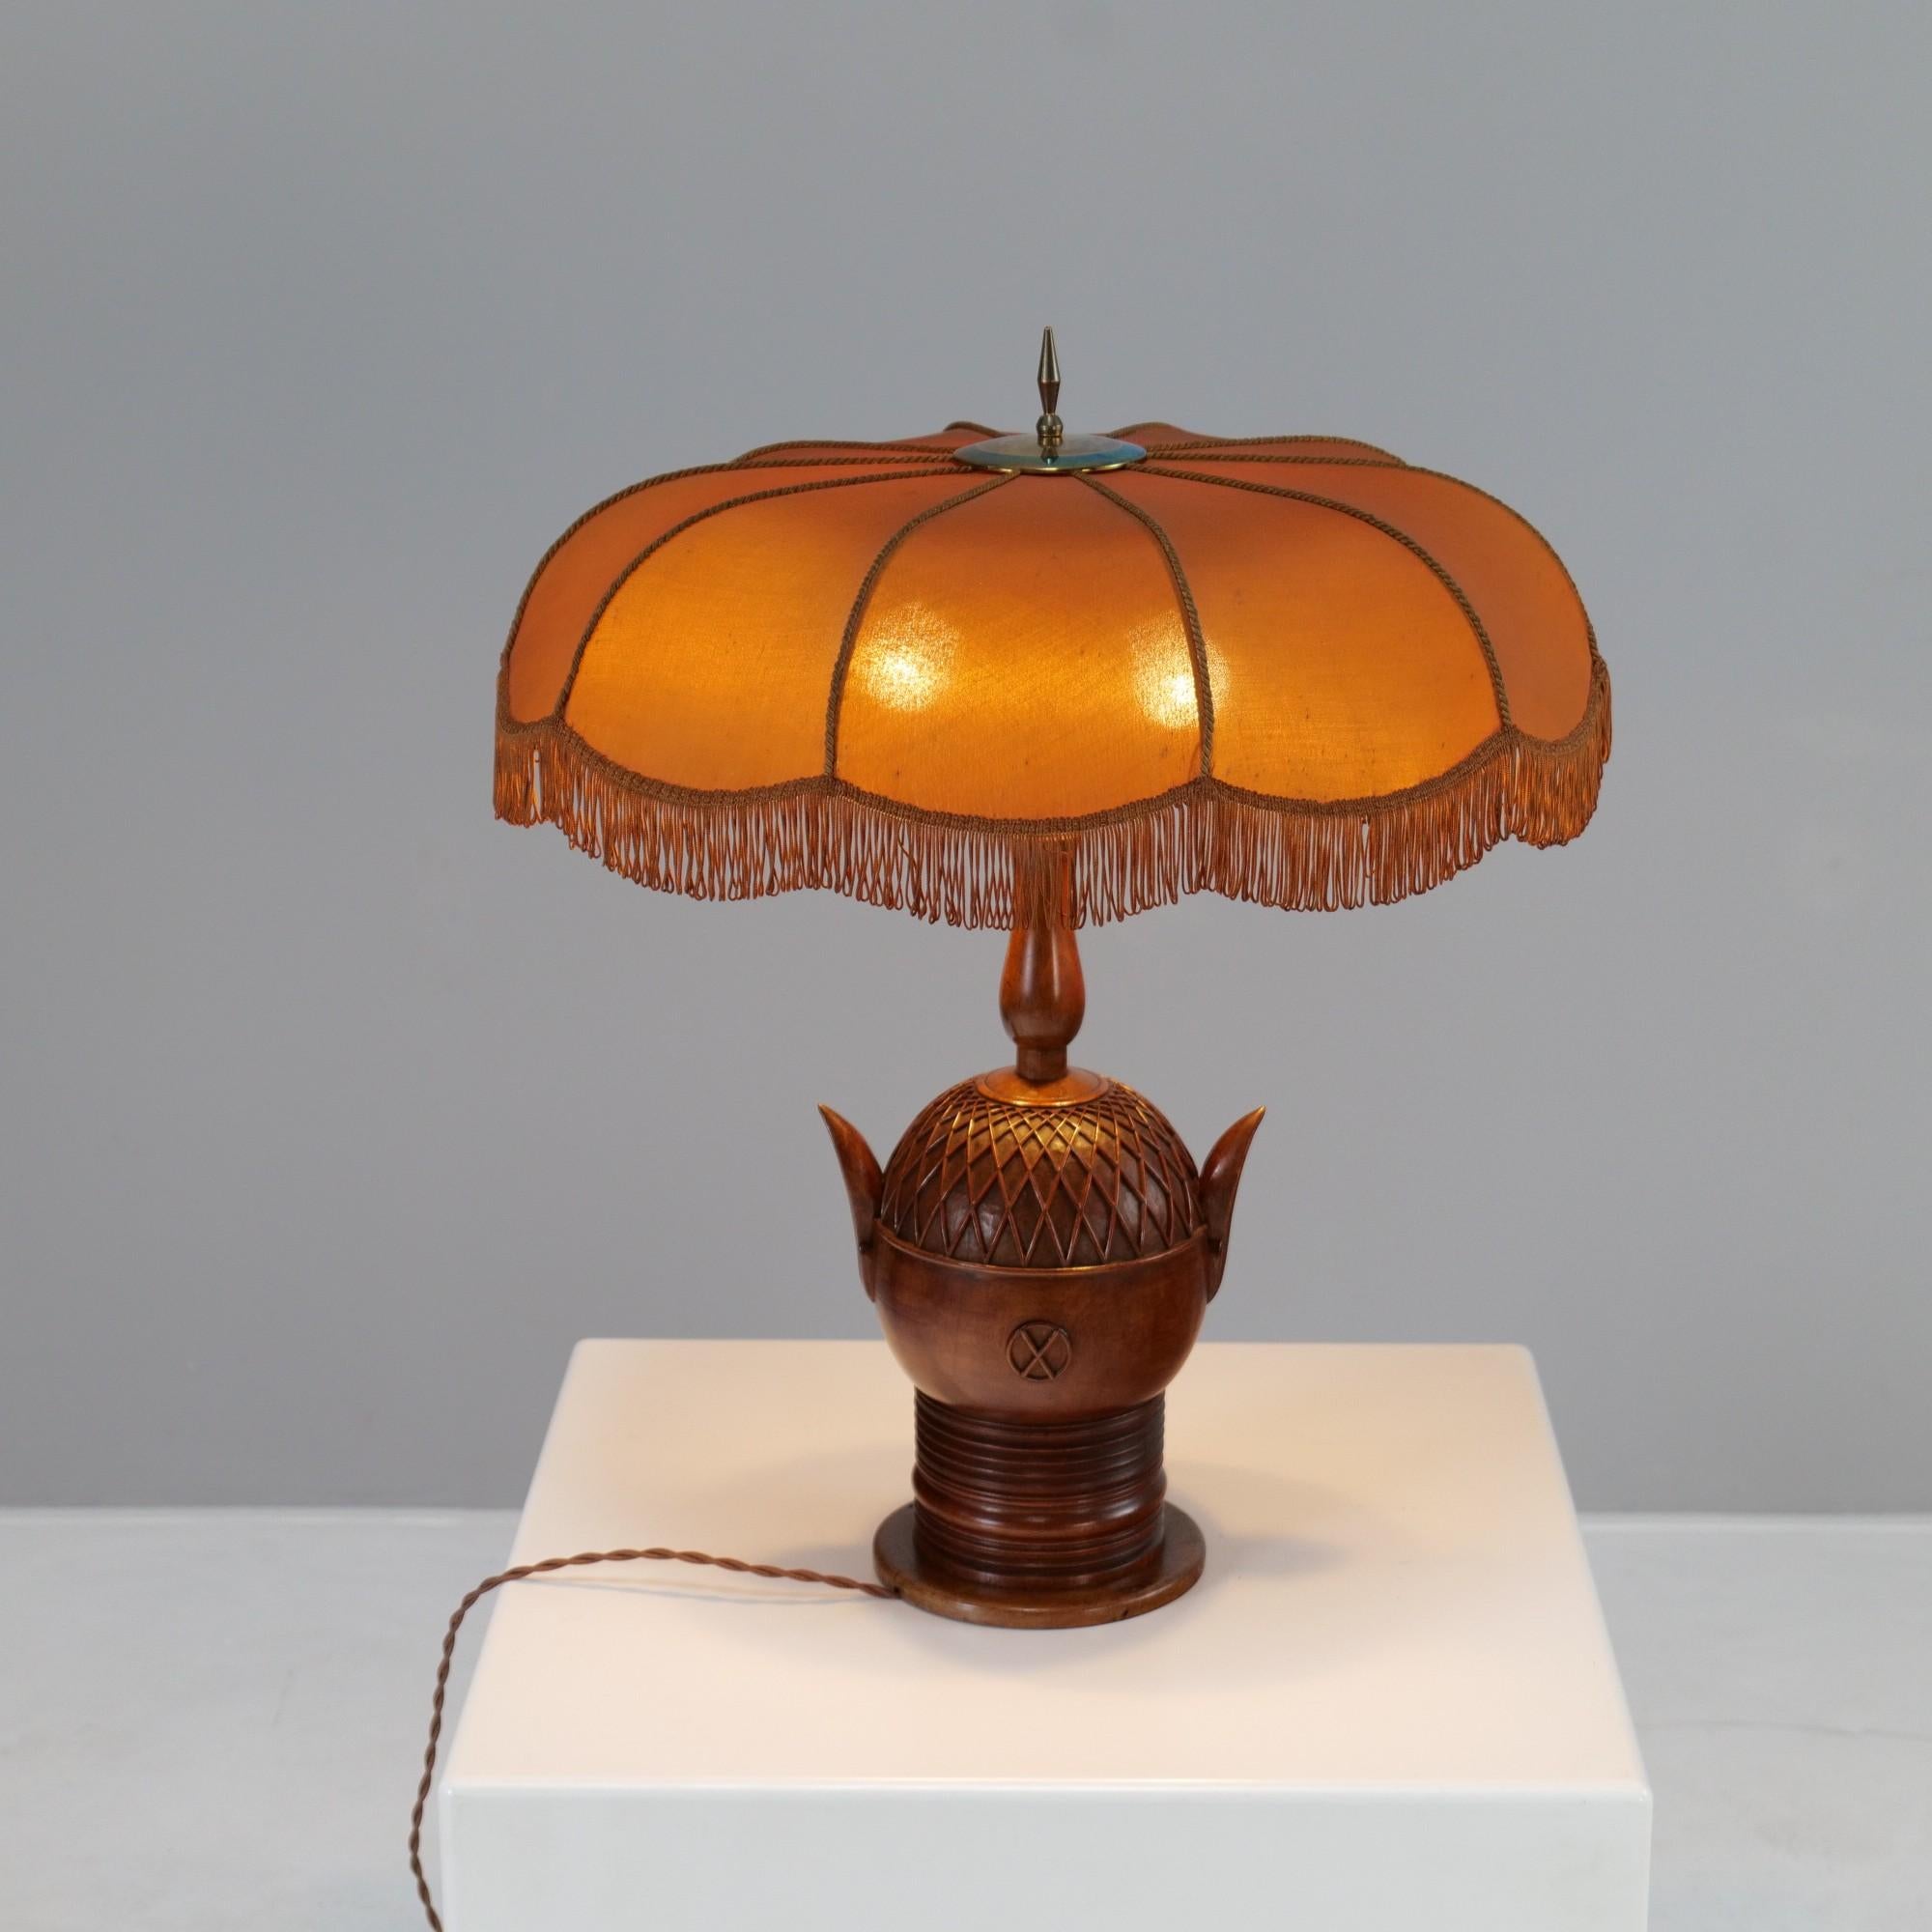 German Fritz August Breuhaus de Groot, Expressionist table lamp for Mikado Werkstätten